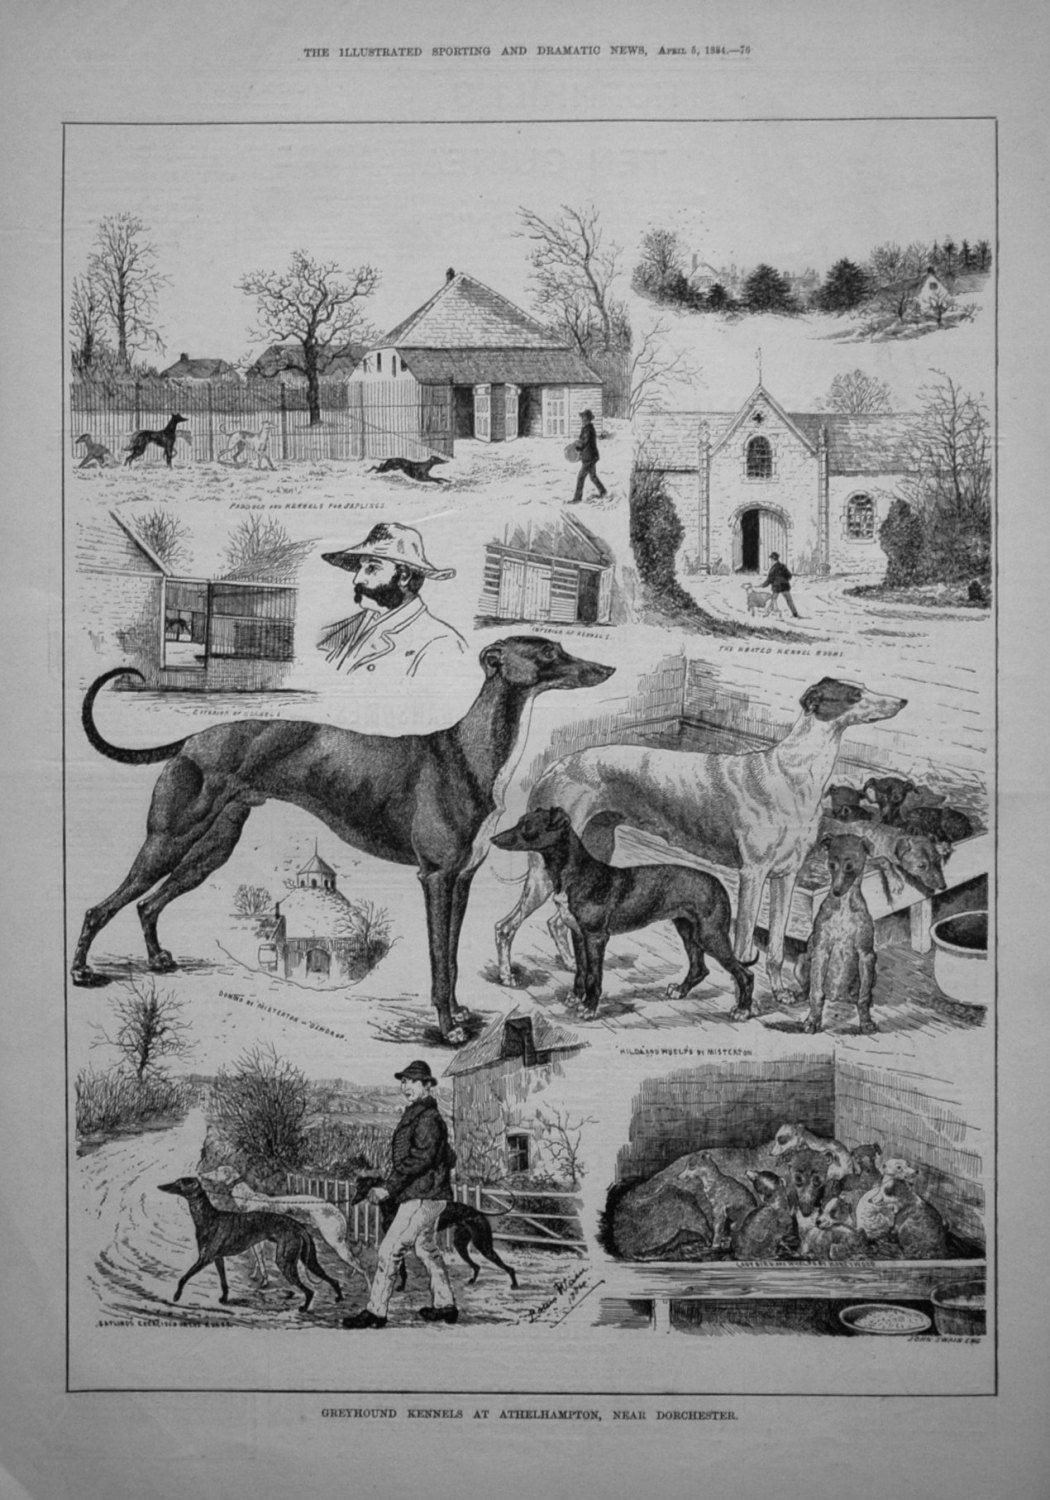 Greyhound Kennels at Athelhampton House, near Dorchester.